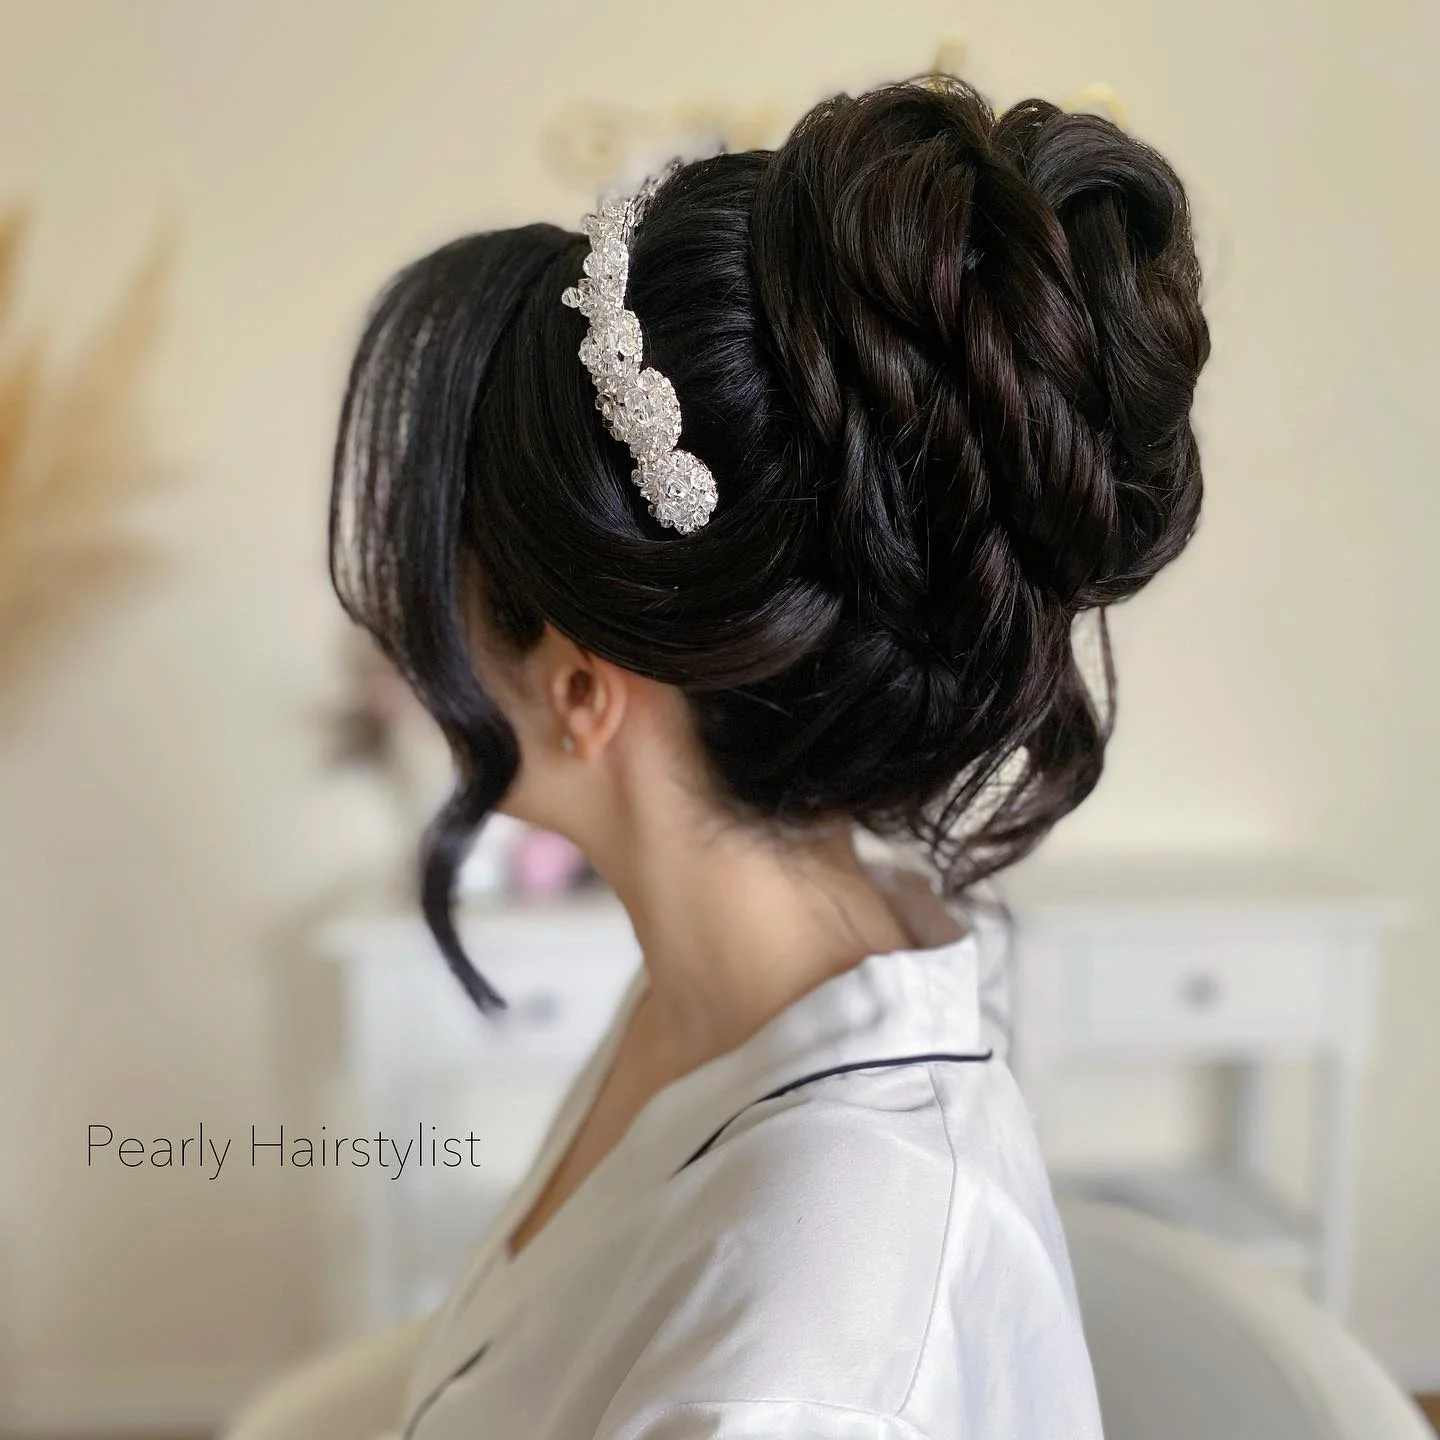 Best-wedding-updo-hairstyles-high-bun-pearly-hairstylist